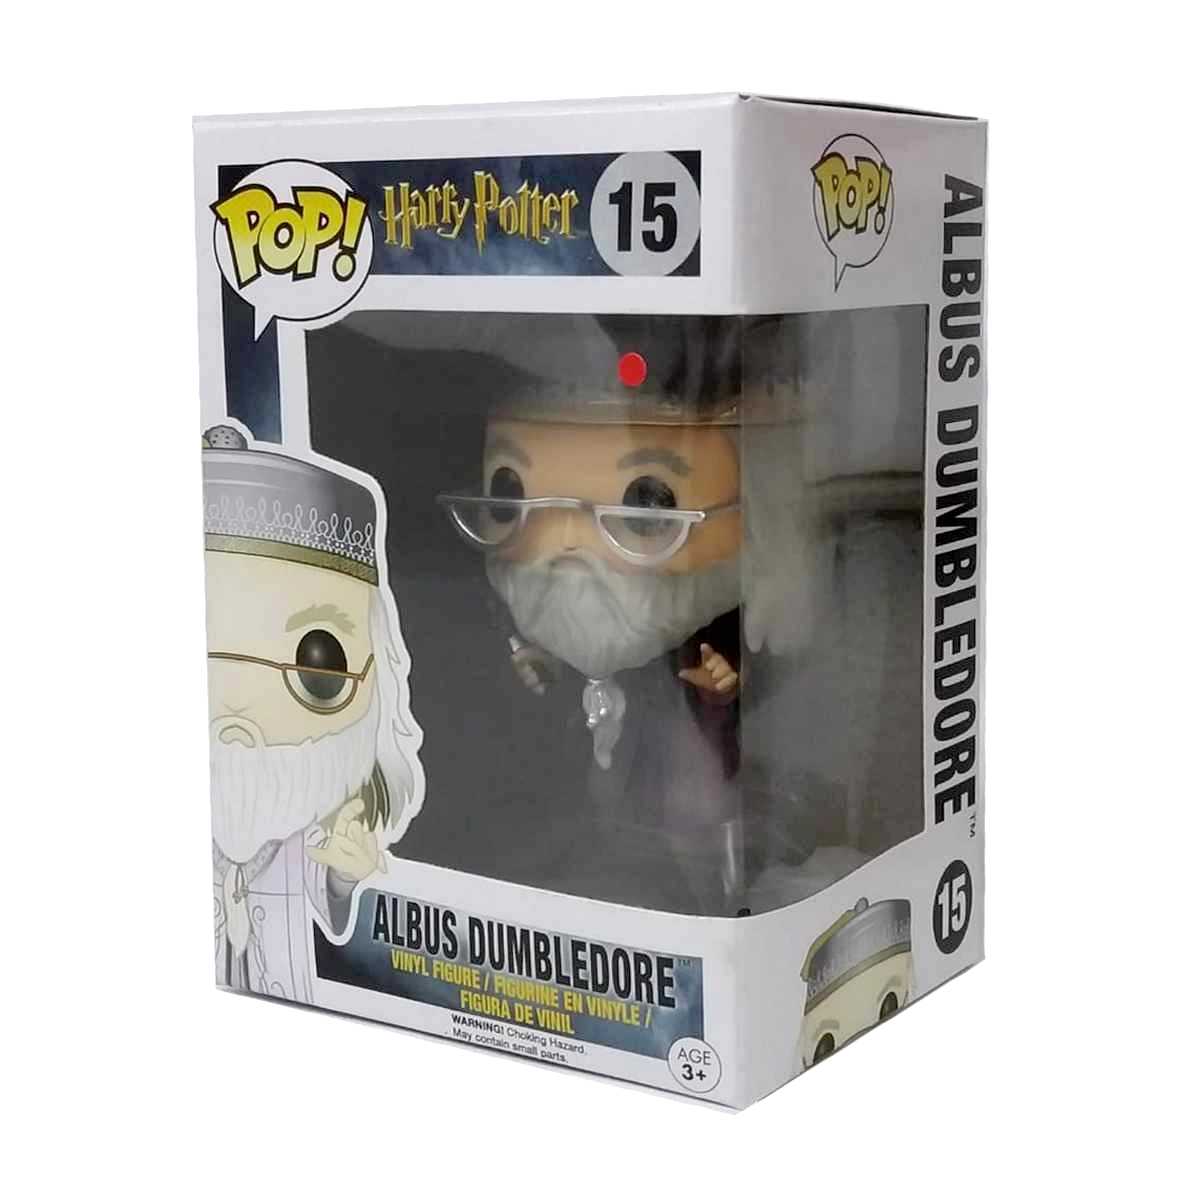 Boneco Funko Pop! Albus Dumbledore / Harry Potter vinyl figure número 15 Vaulted